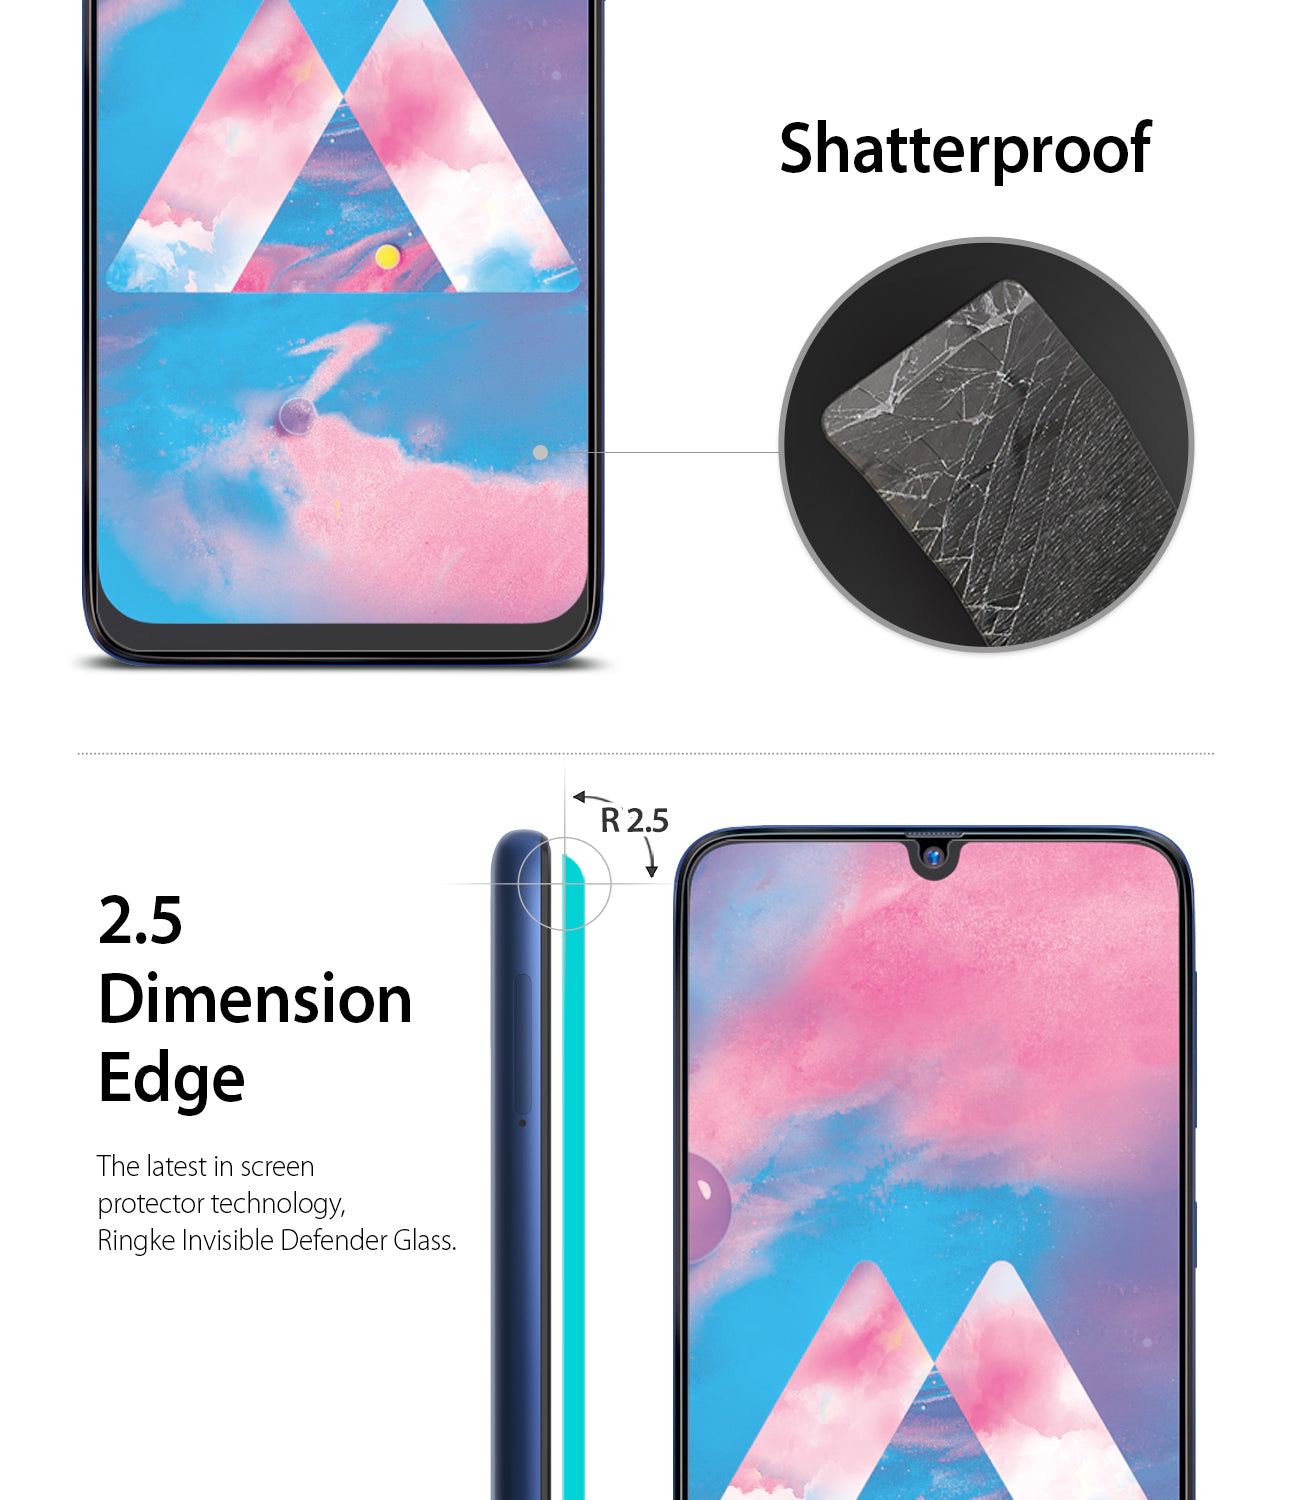 shatterproof, 2.5 dimension edge